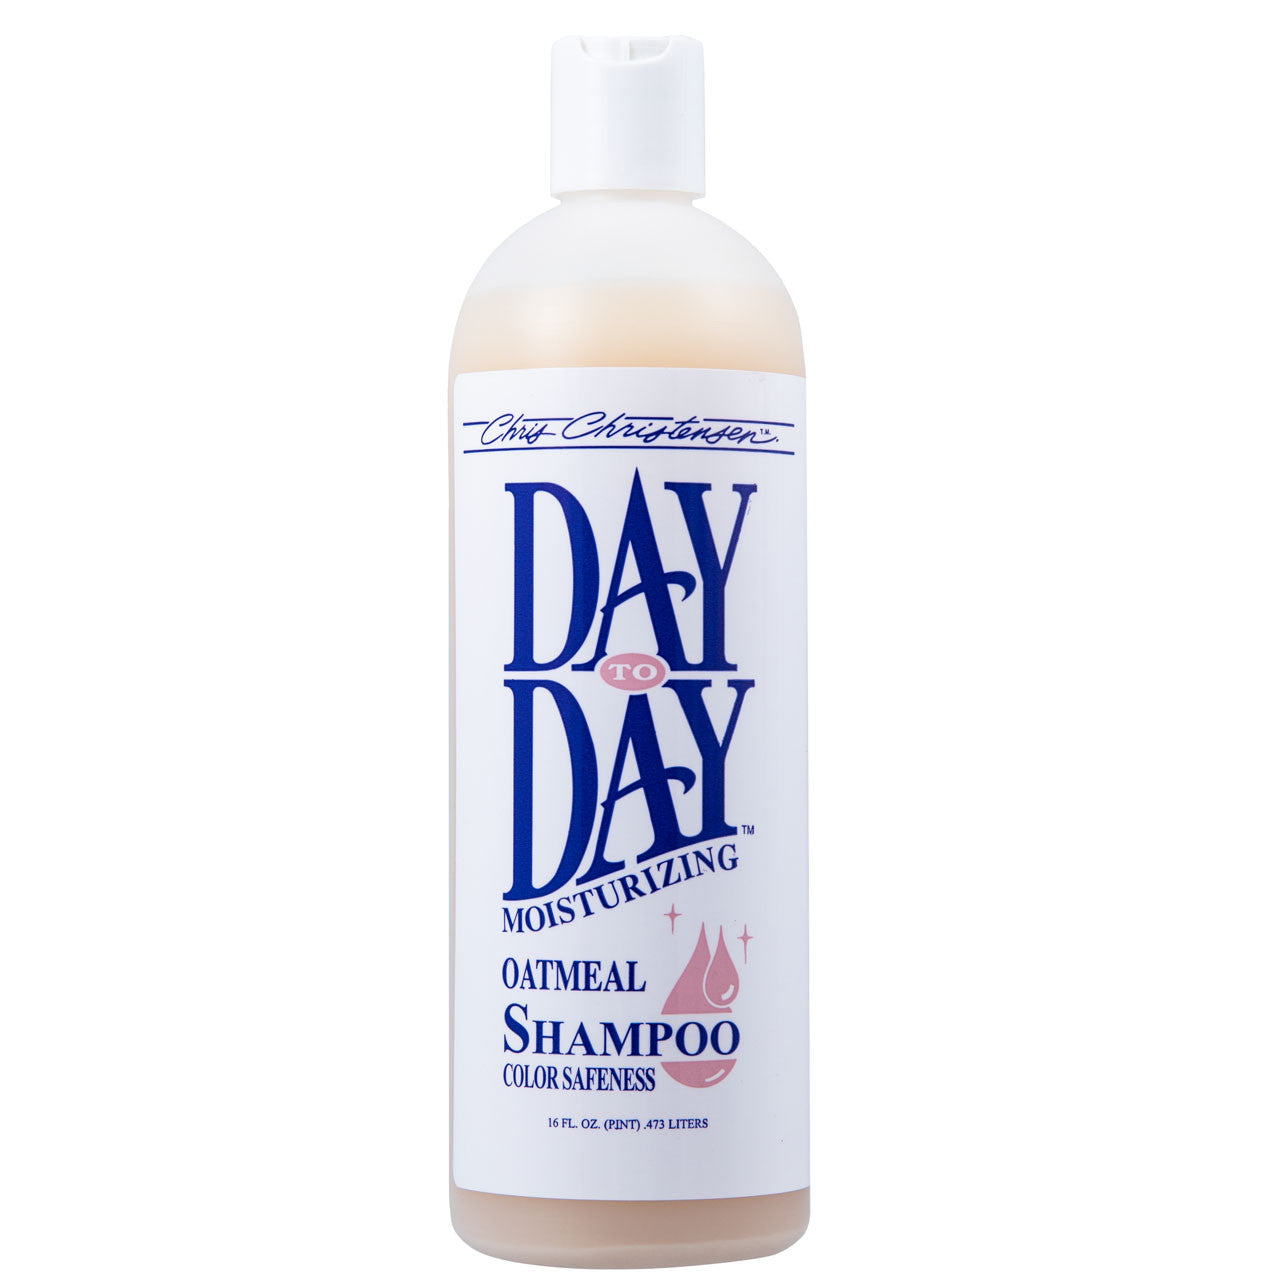 Chris Christensen - Day to Day Moisturizing Oatmeal Shampoo 16 FL. OZ. (Pint) .473 Liters